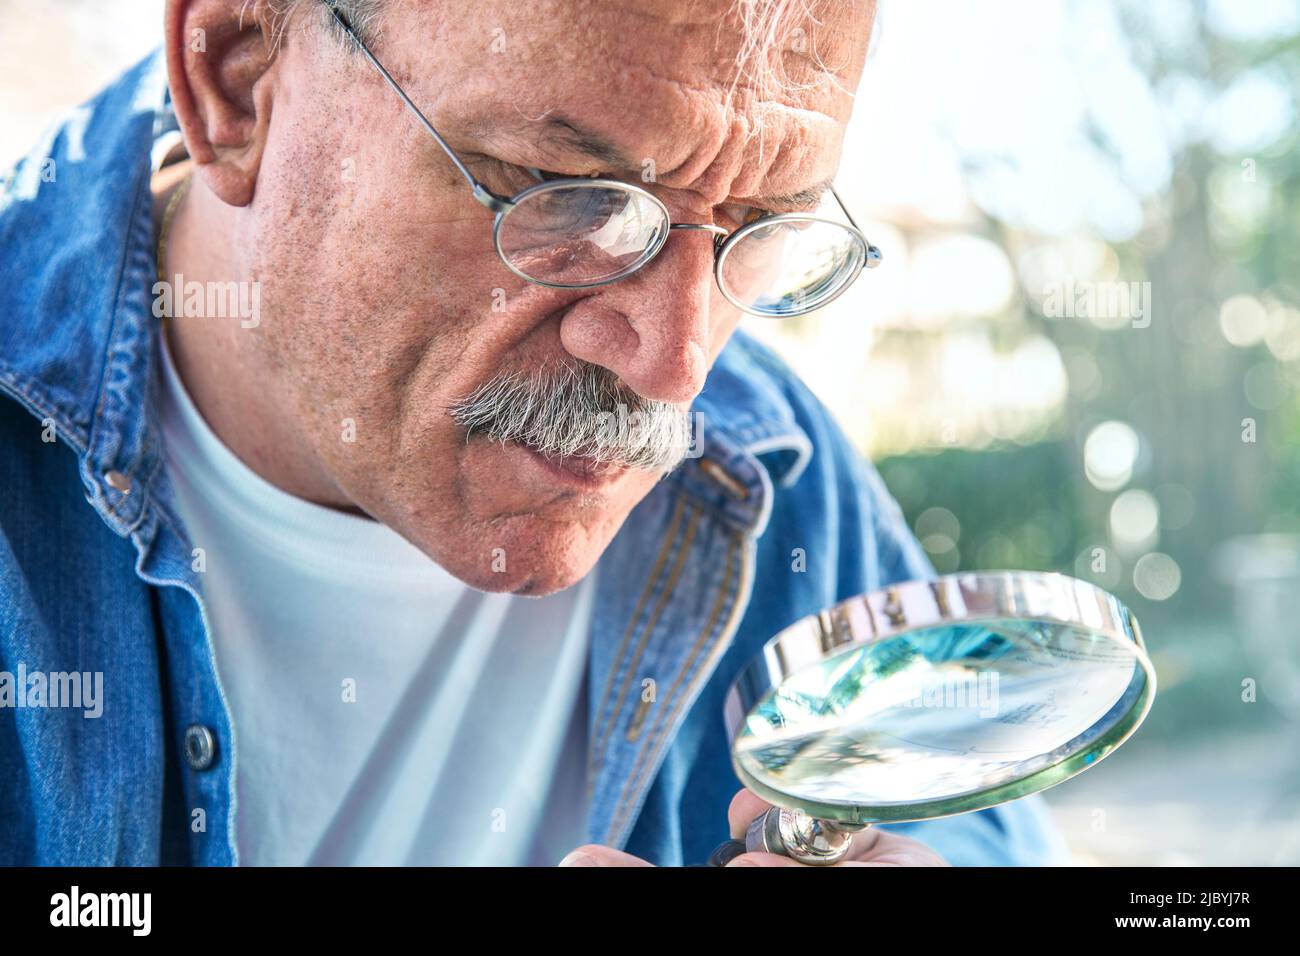 Older man using magnifying glass Stock Photo